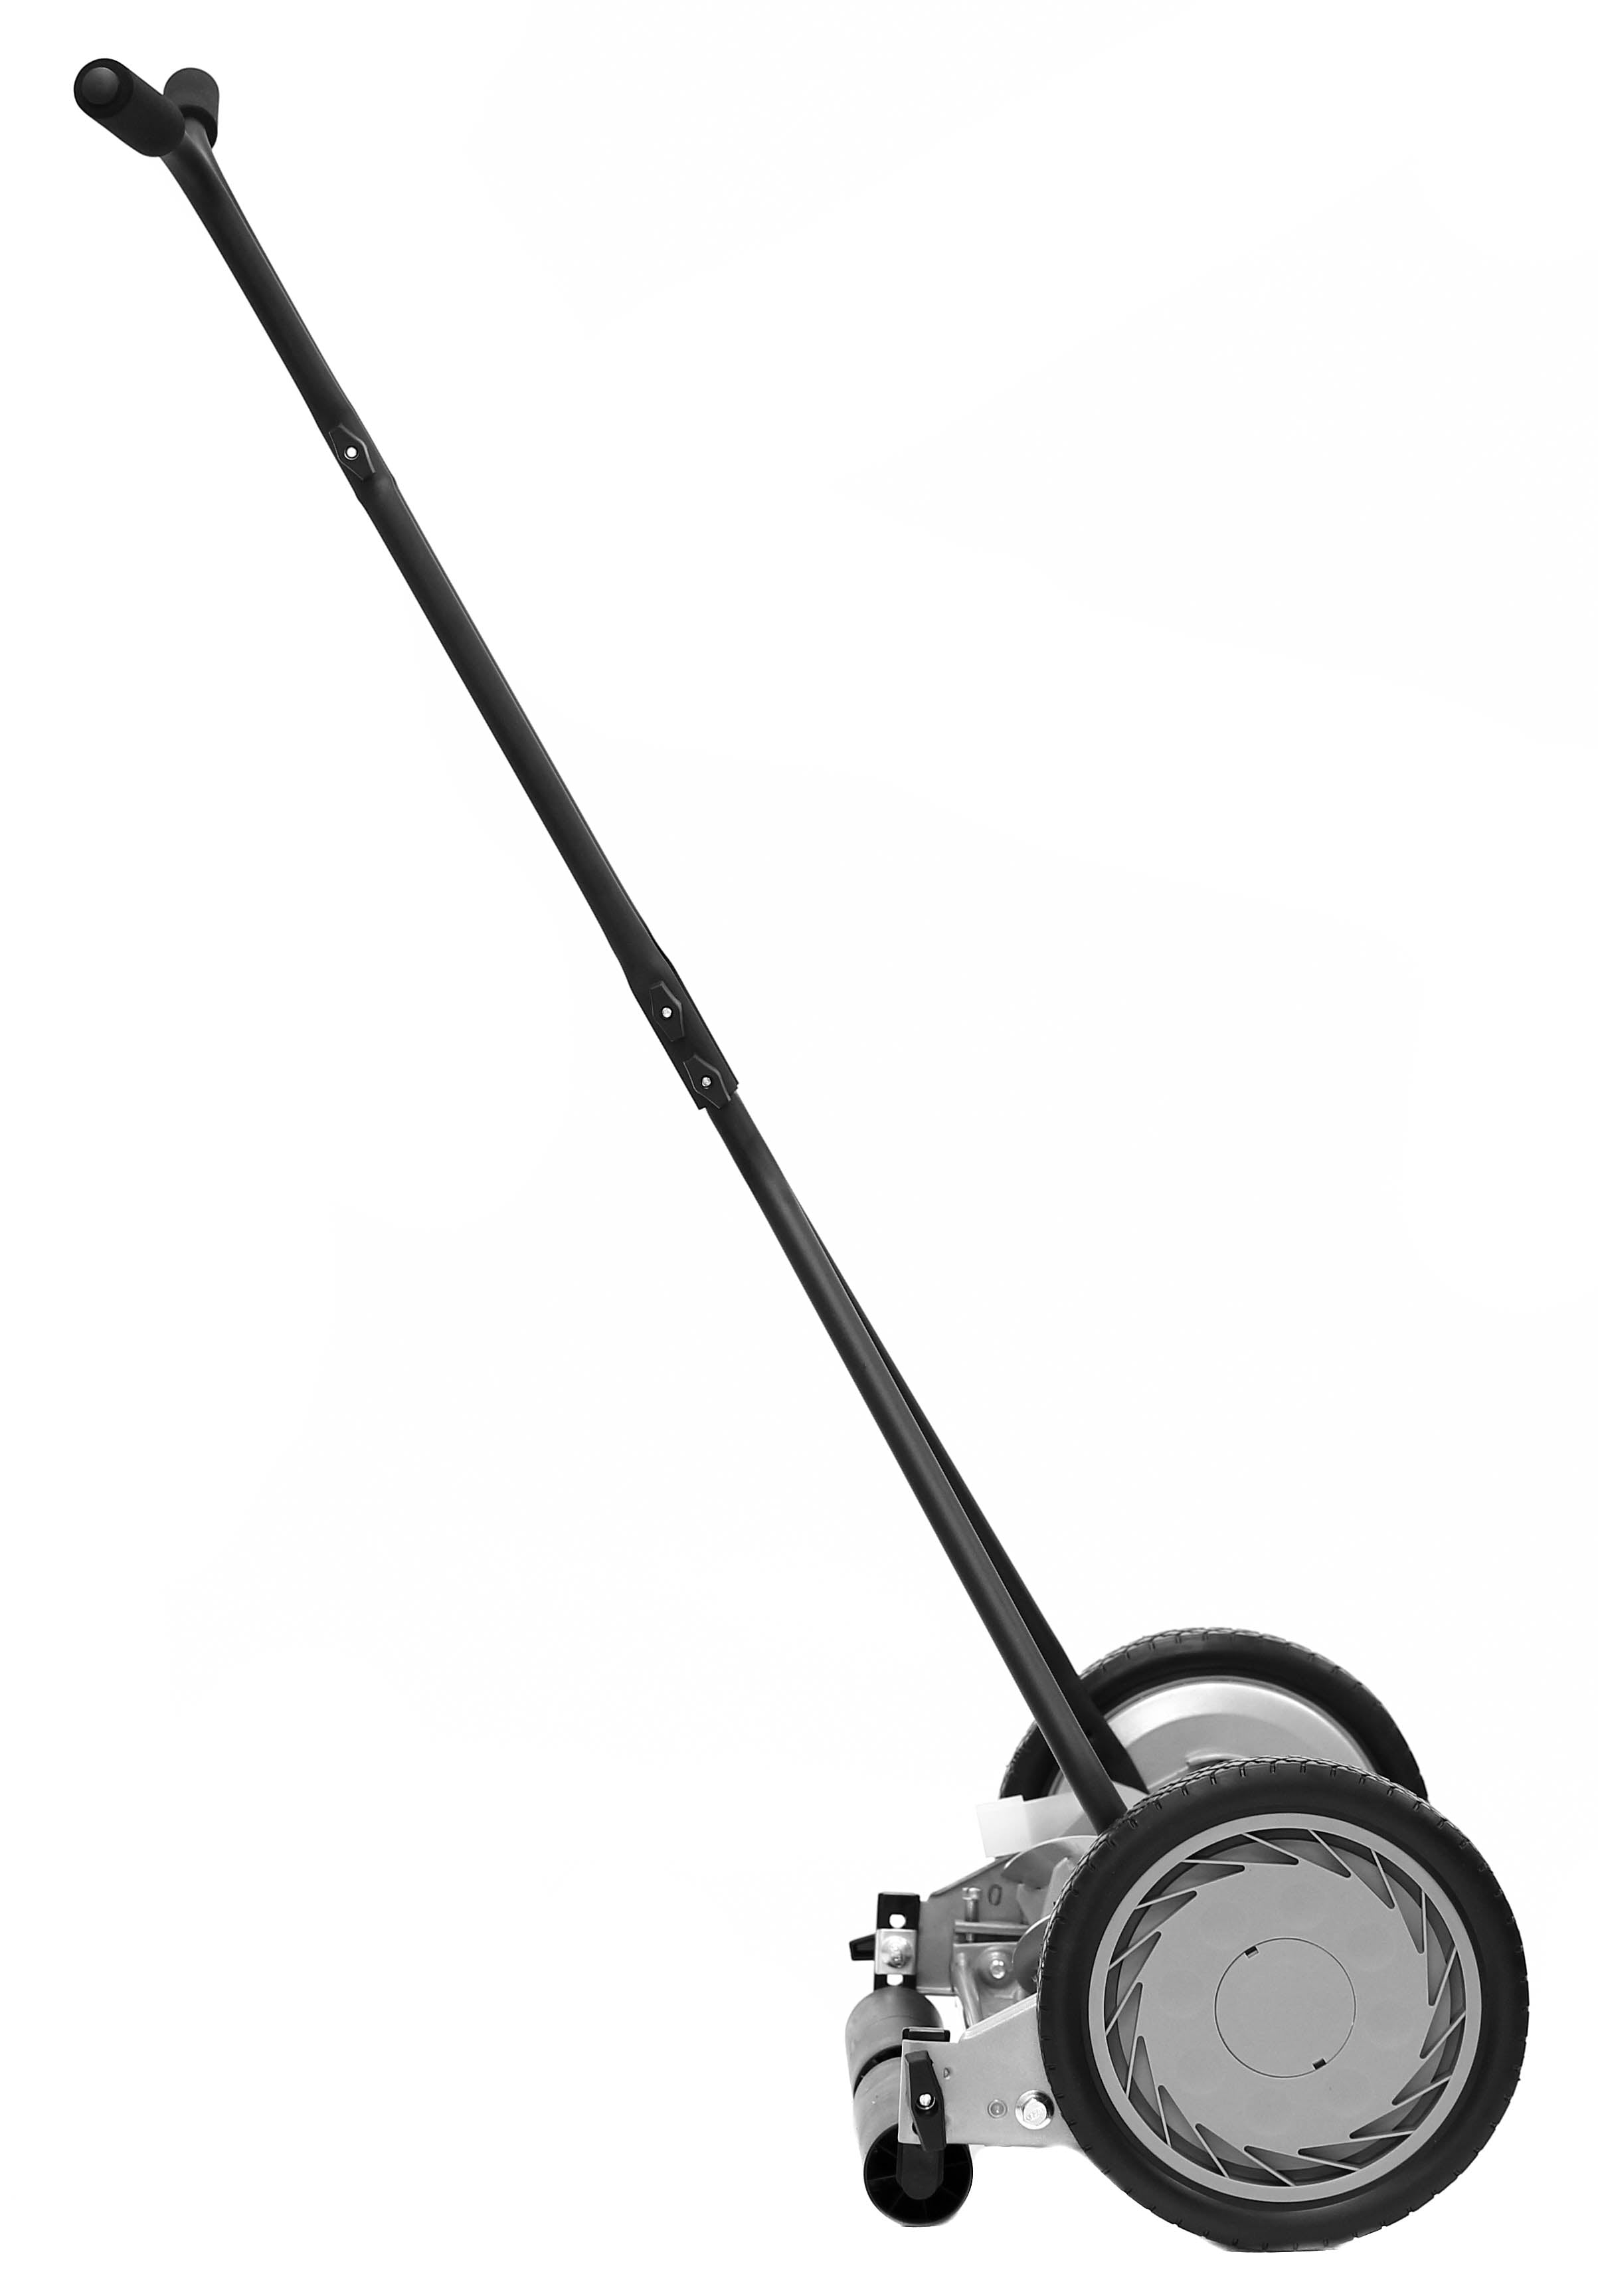 Great States 16 Manual Reel Mower – American Lawn Mower Co. EST 1895